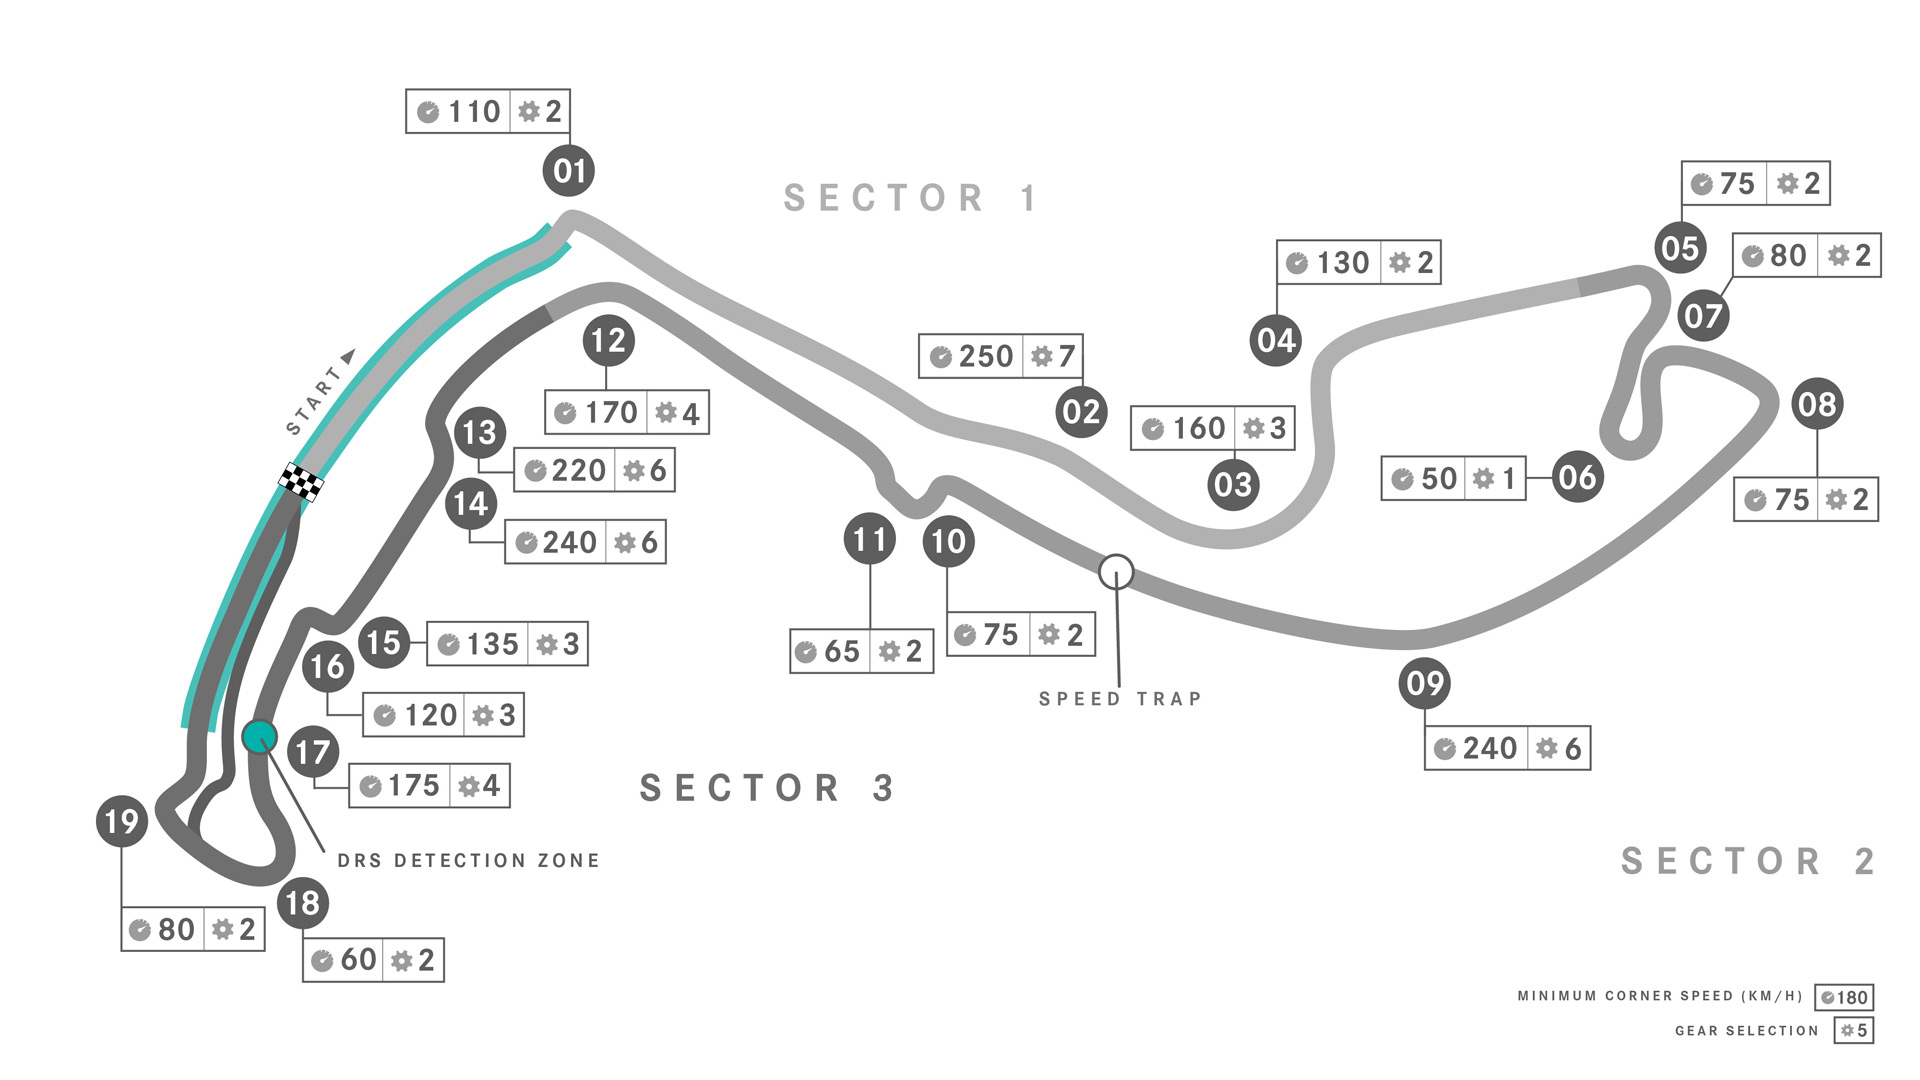 2022 F1 Monaco Grand Prix preview Qualifying is key